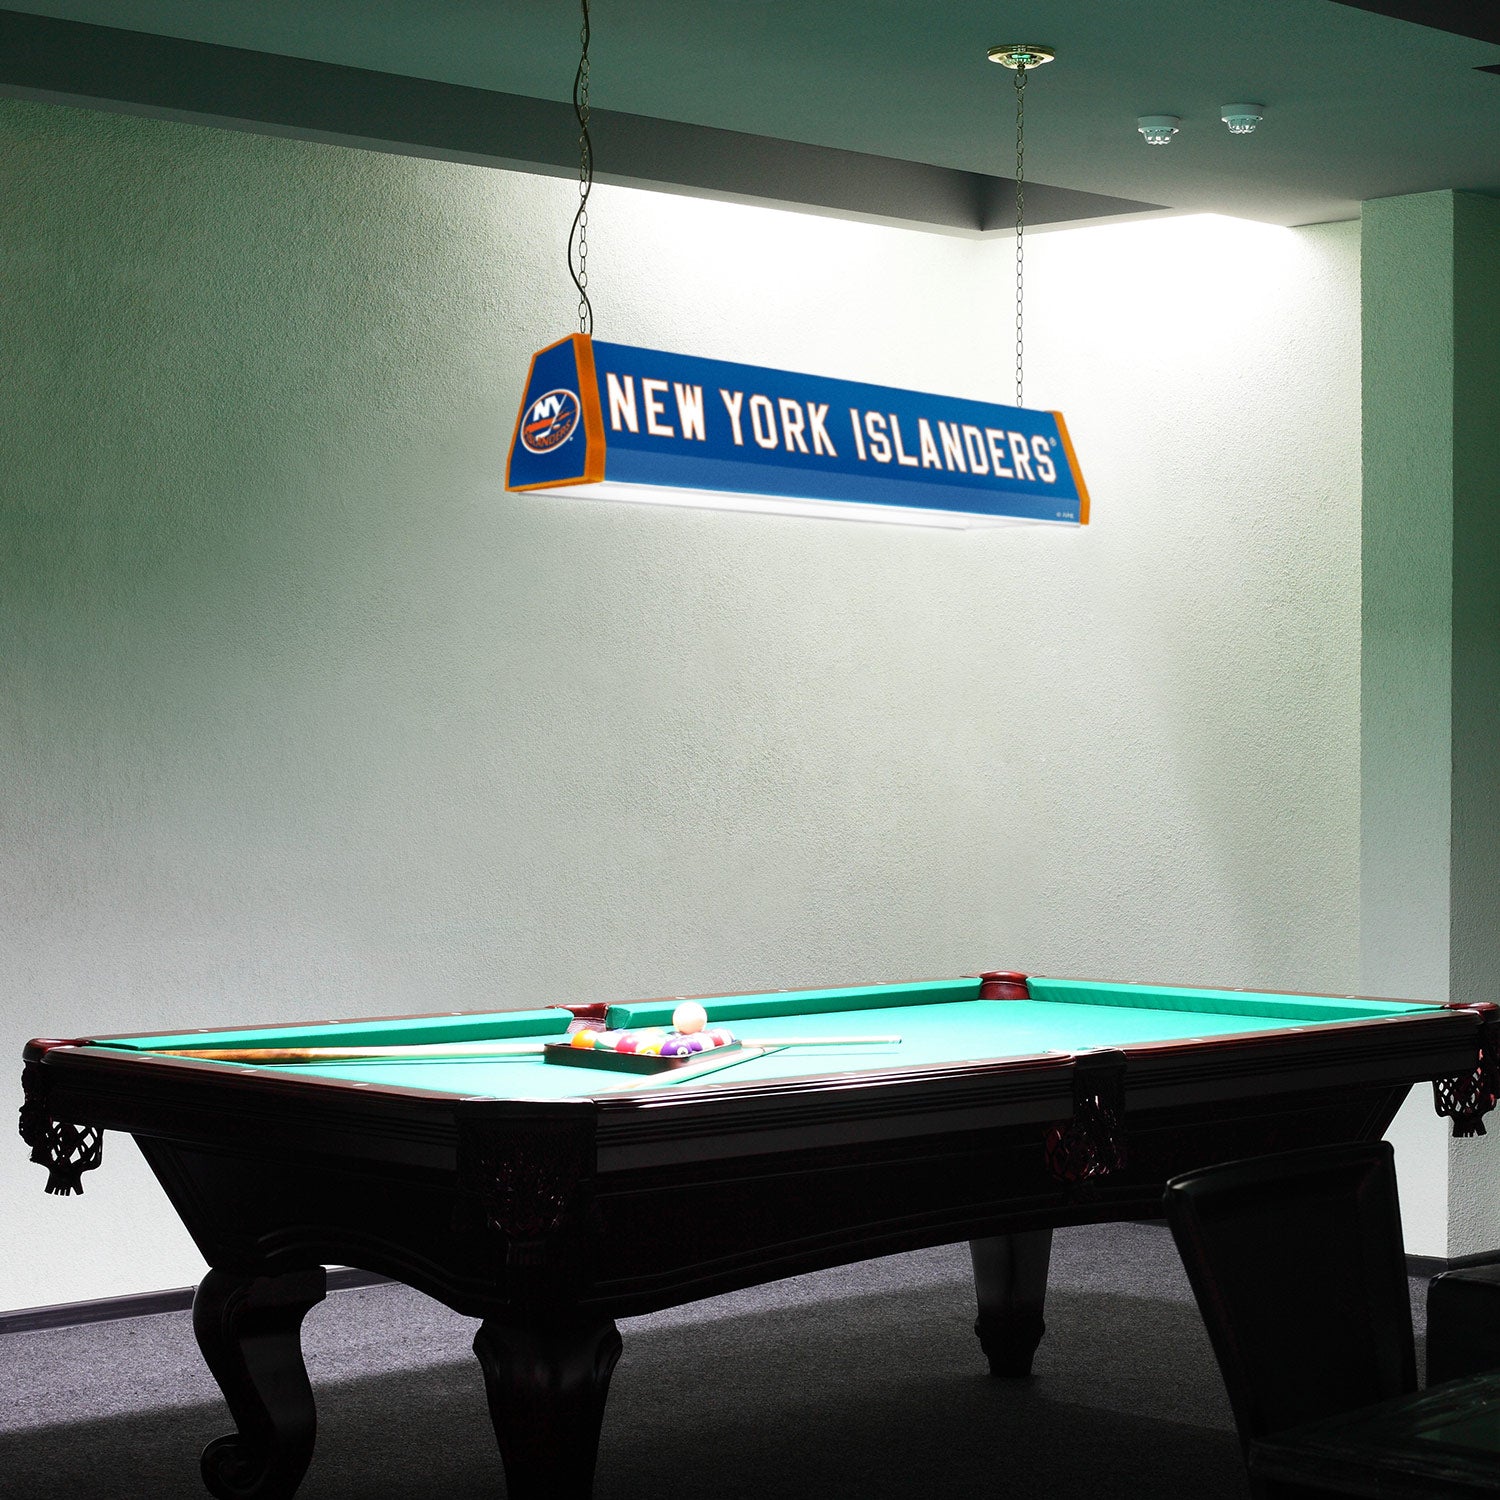 New York Islanders Standard Pool Table Light Room View